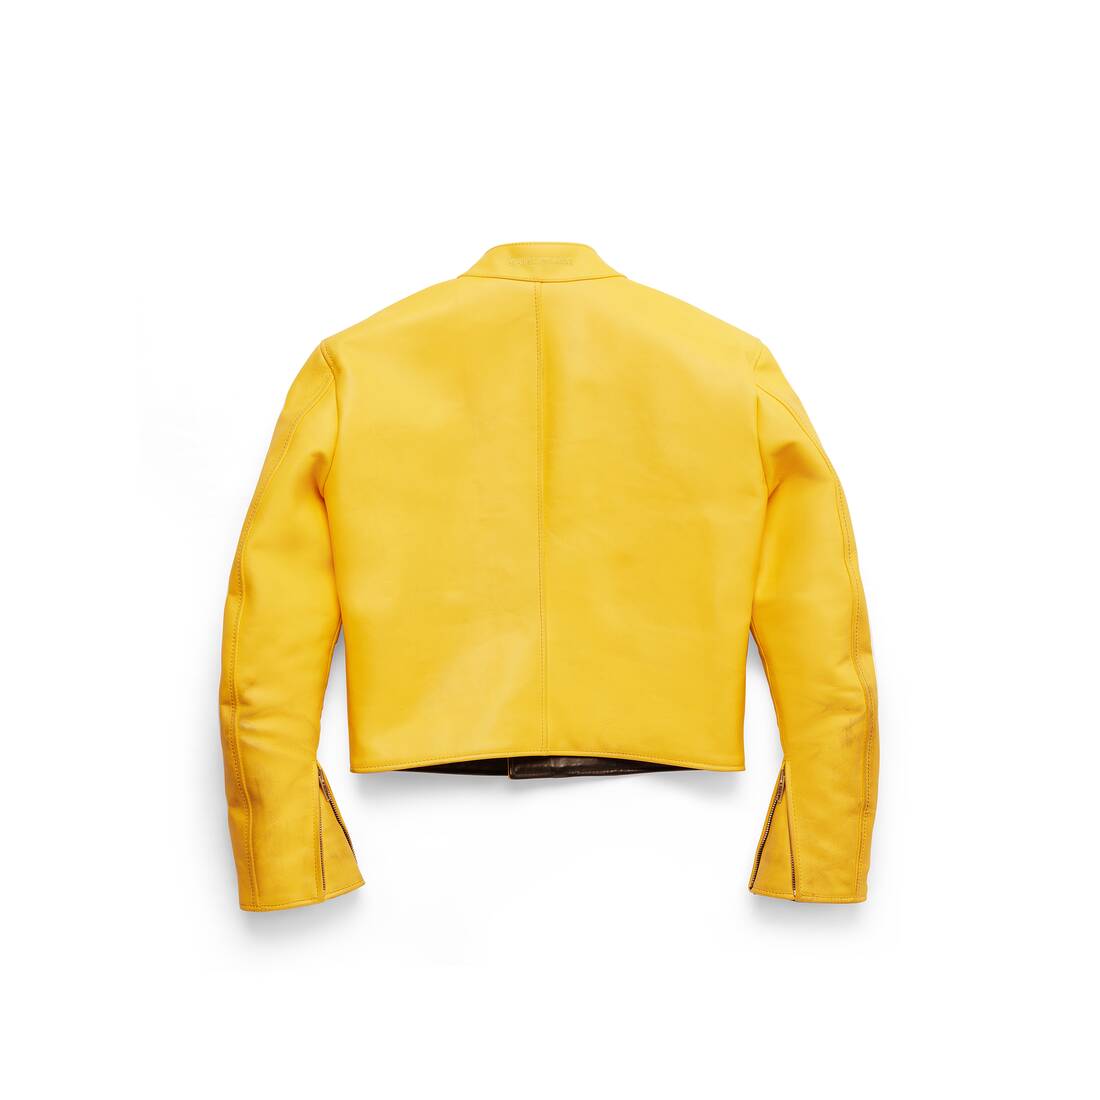 Women's Shrunk Racer Jacket in Yellow